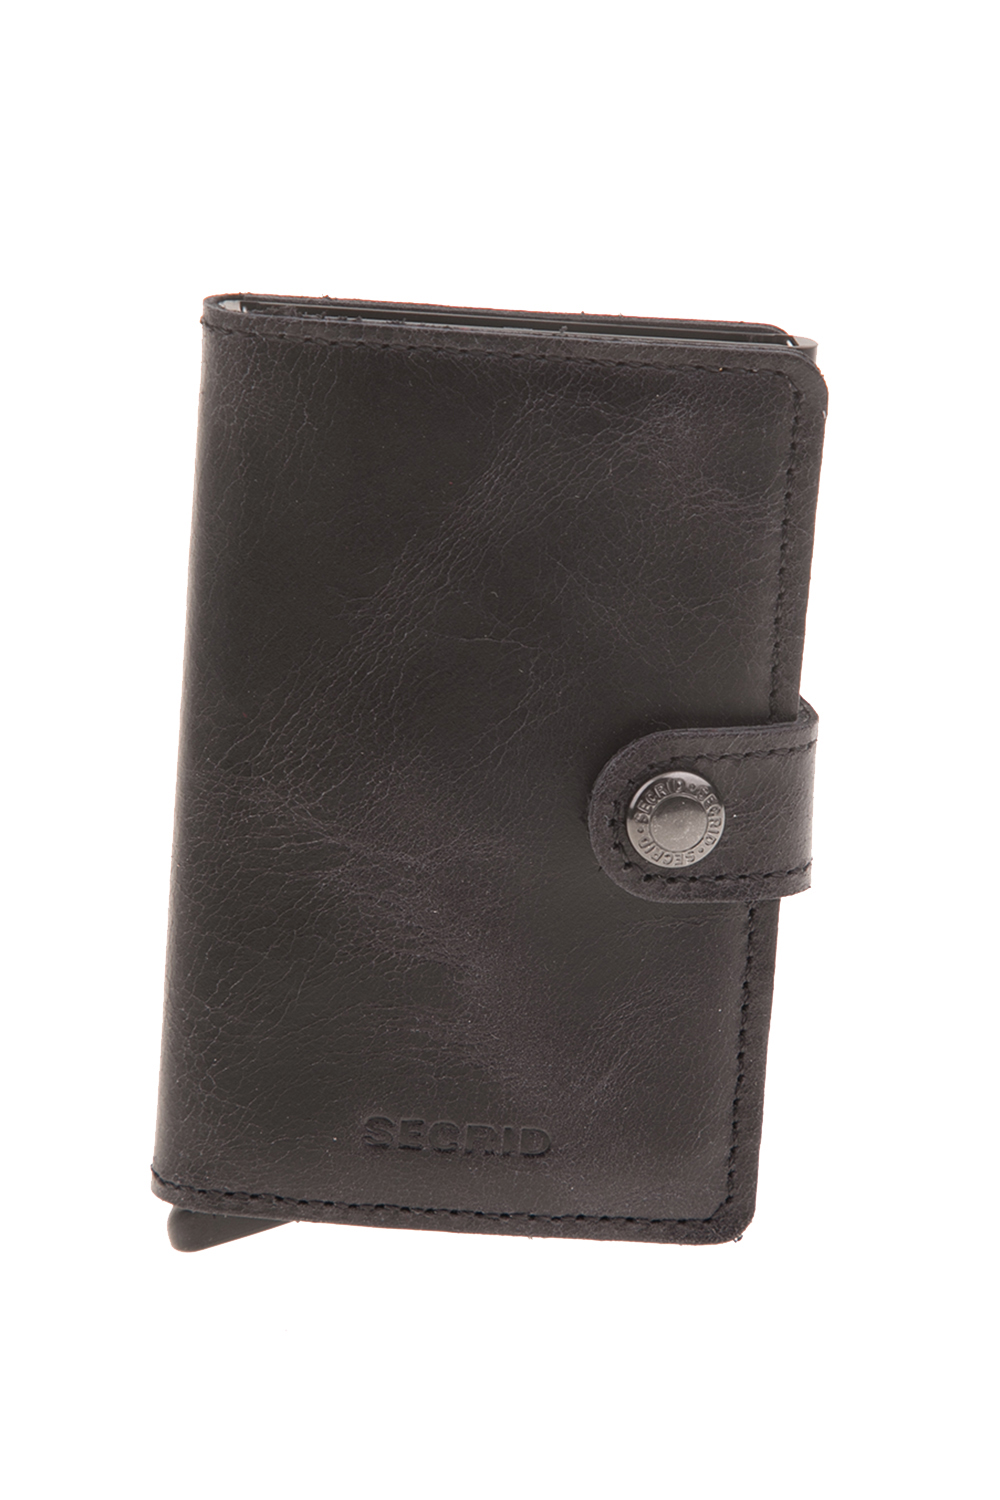 SECRID - Unisex πορτοφόλι SECRID Miniwallet Vintage μαύρο Ανδρικά/Αξεσουάρ/Θήκες